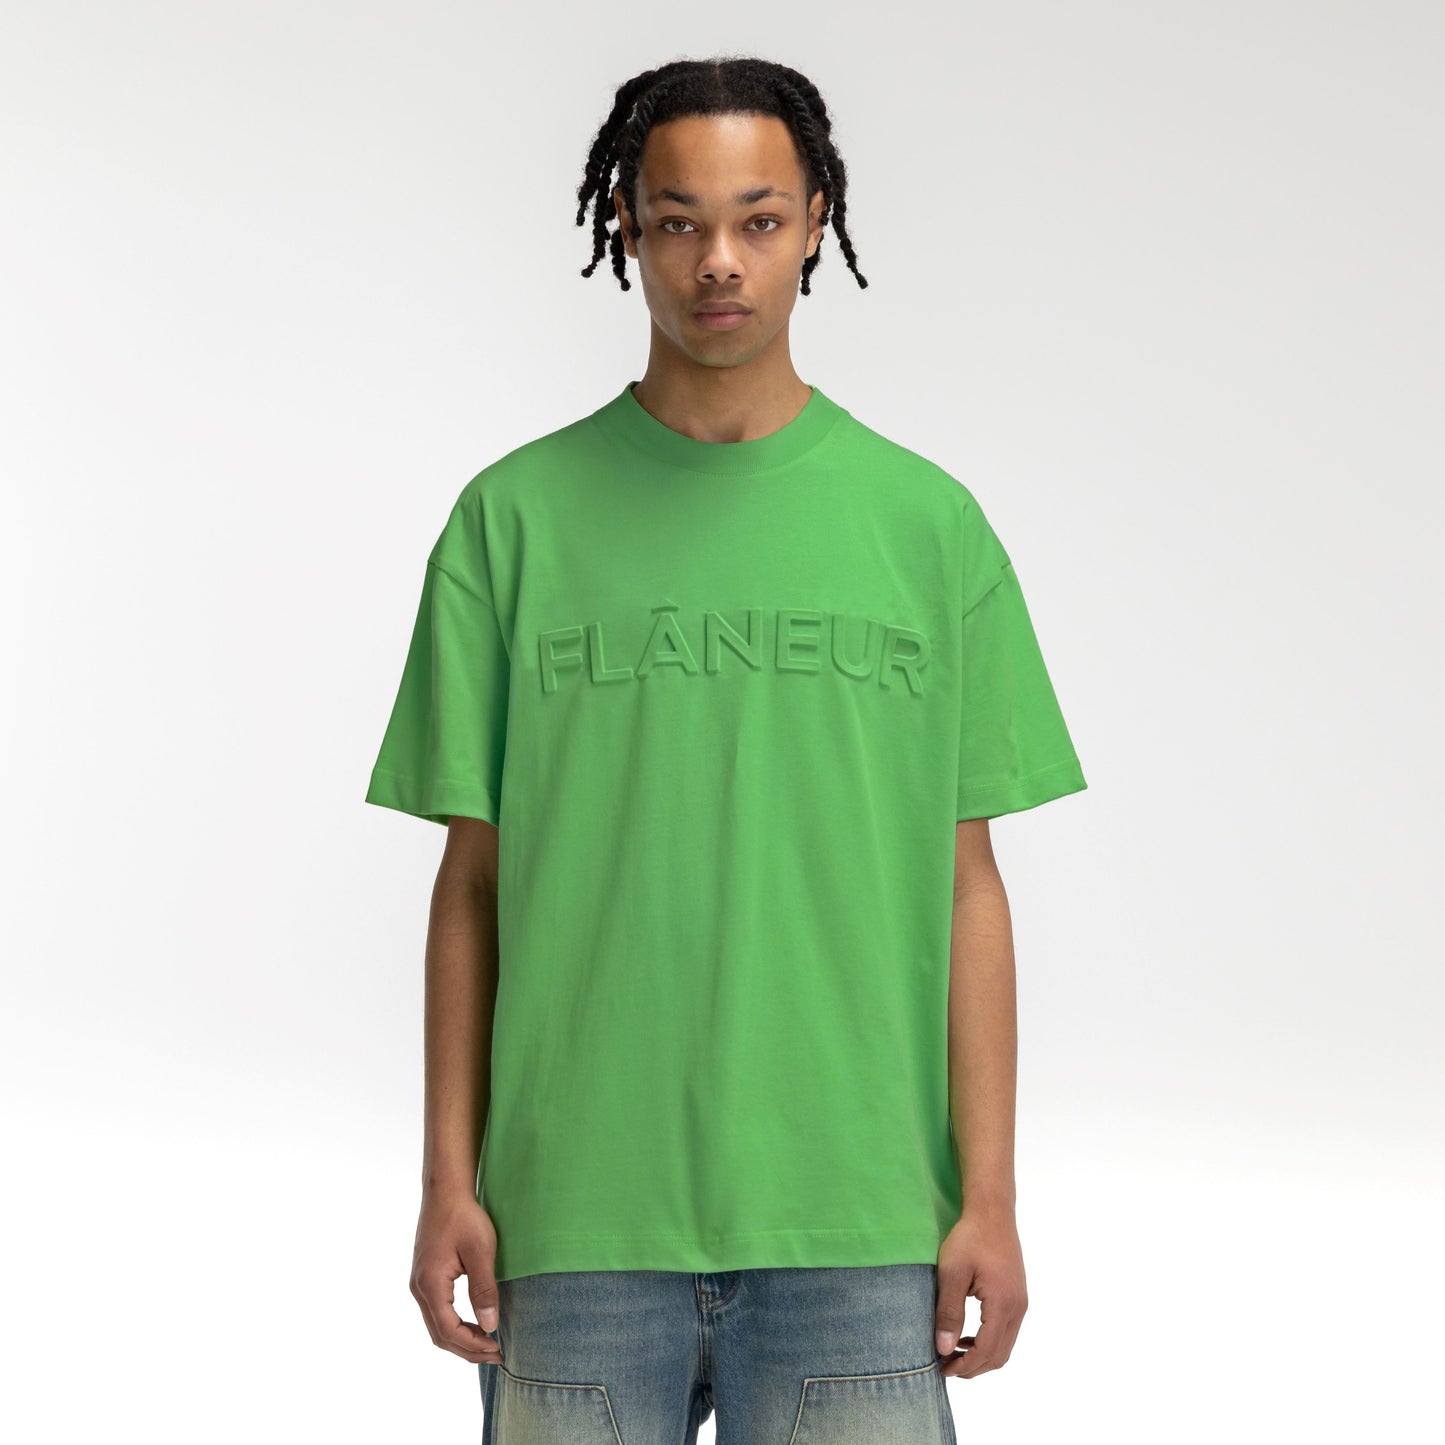 Embossed T-Shirt Green